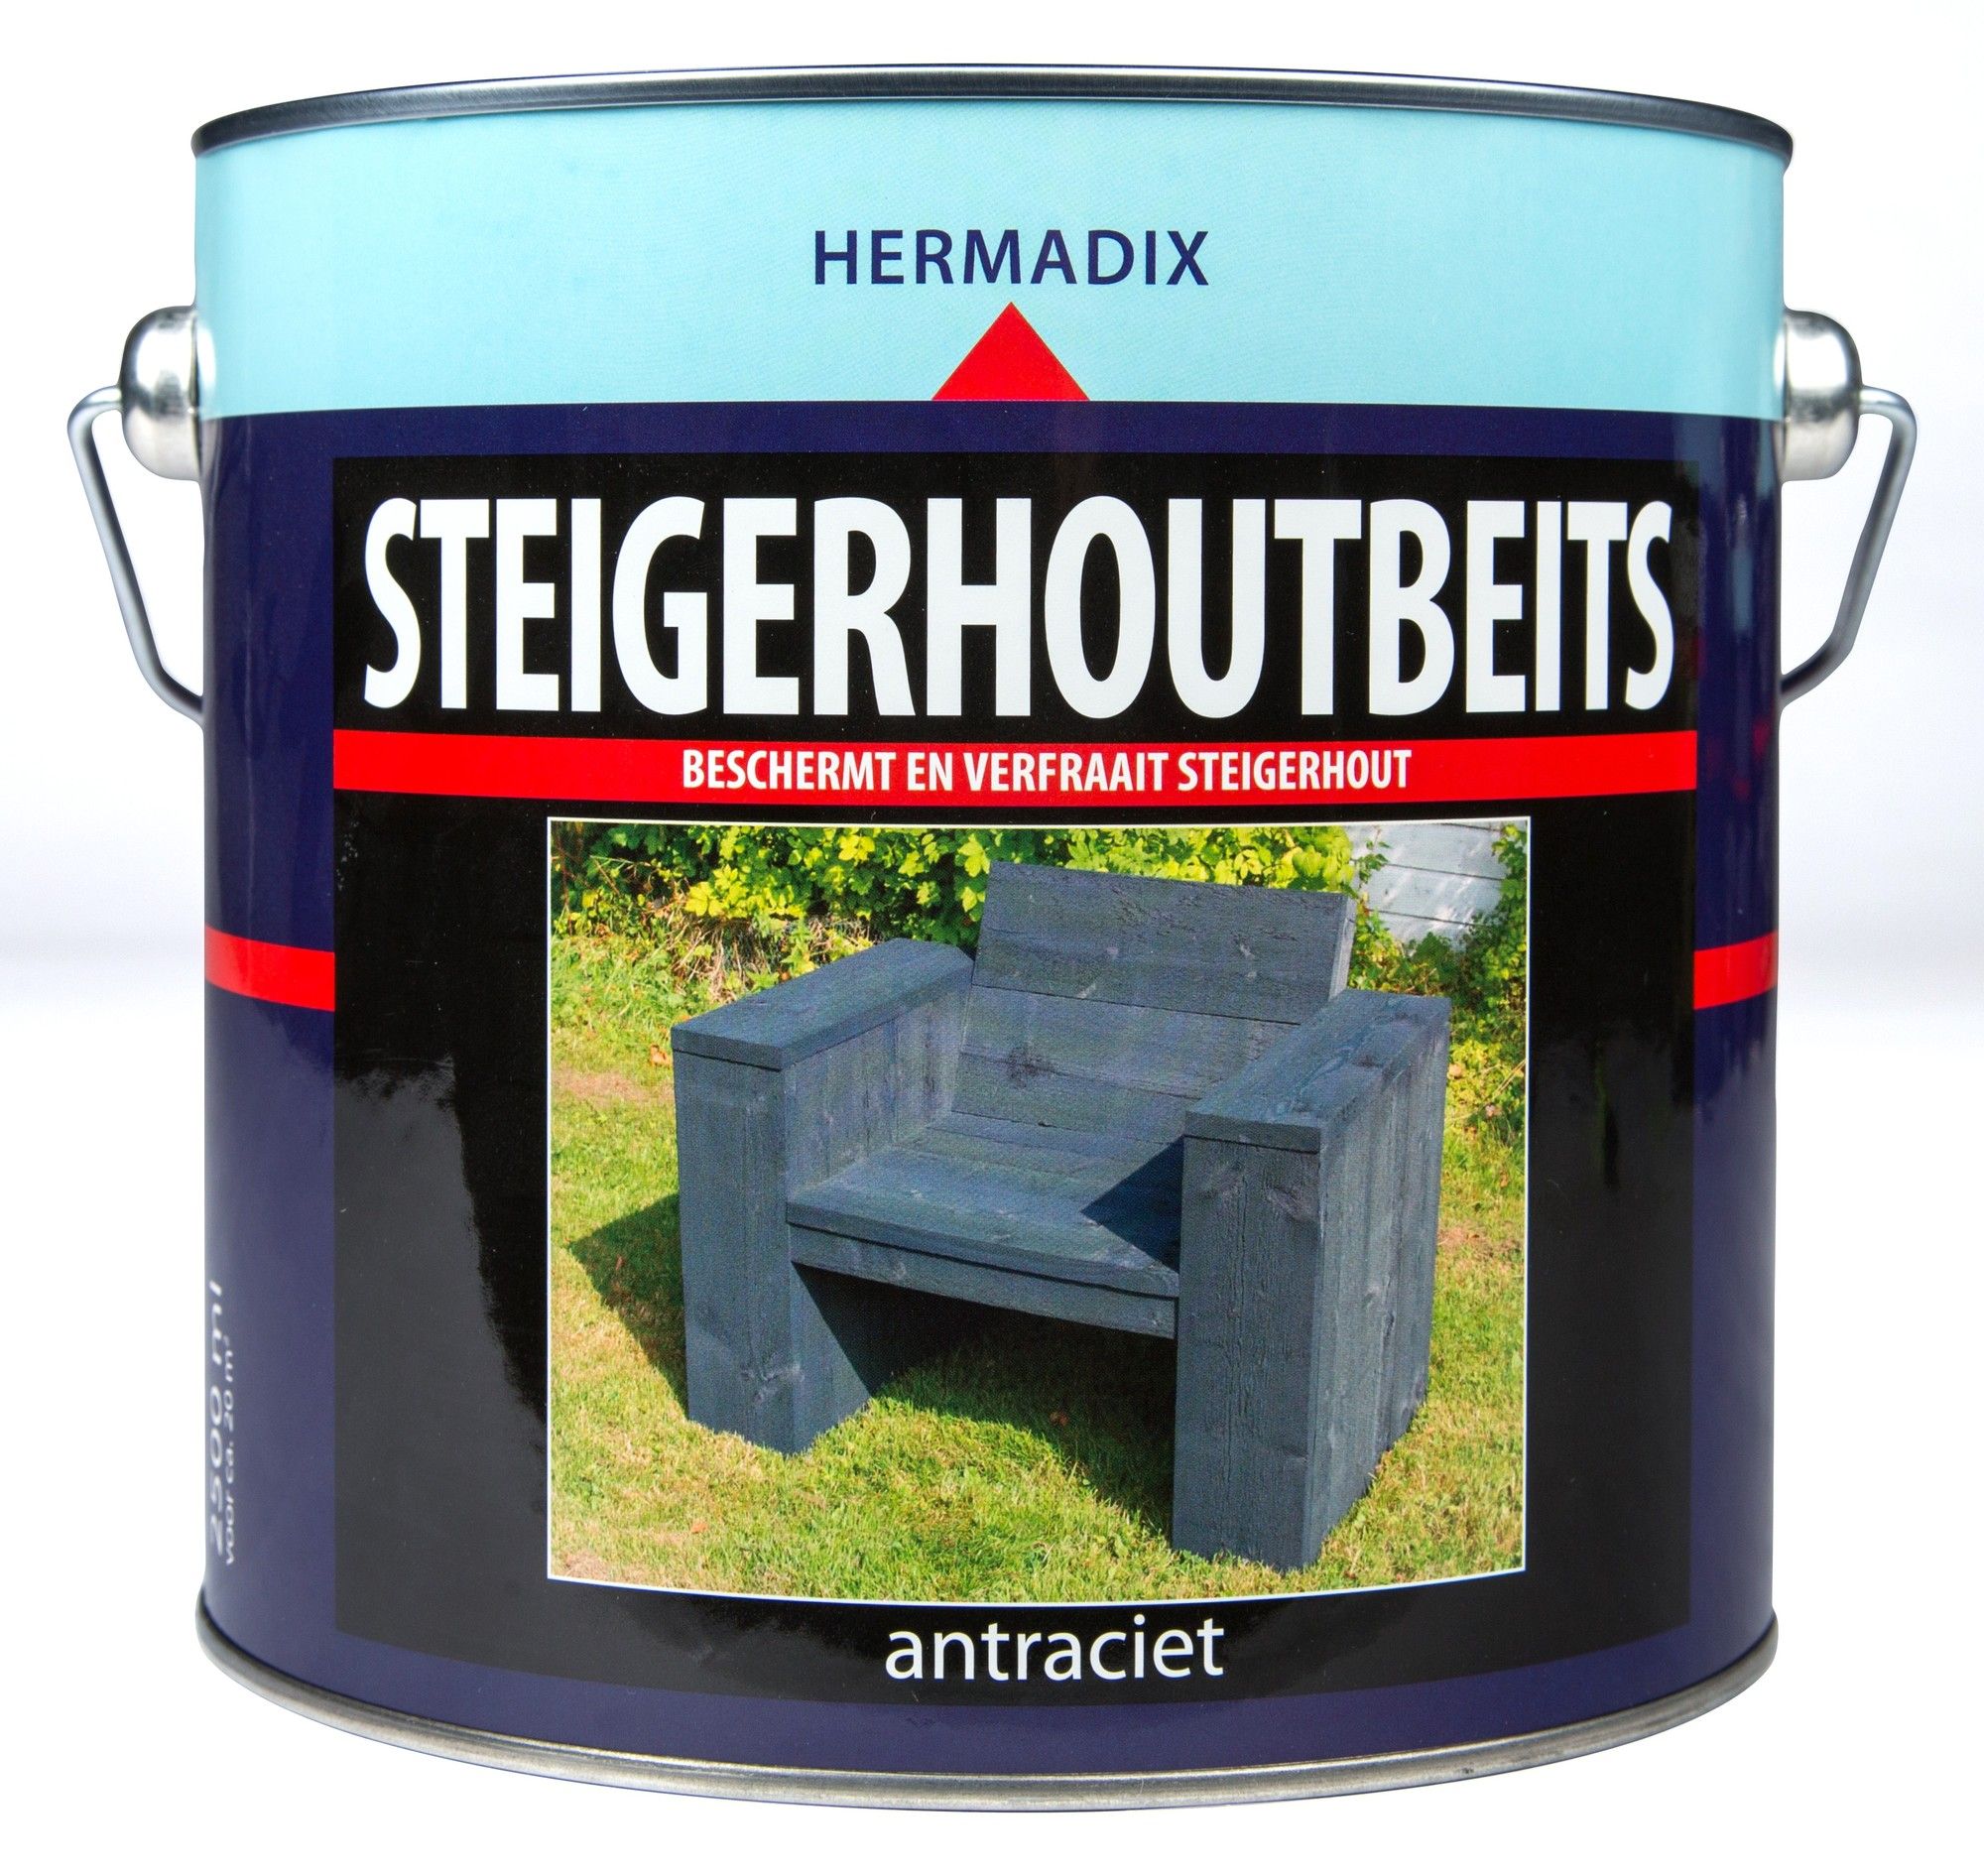 kiem verontschuldiging Volwassen Hermadix steigerhoutbeits antraciet - 2,5 liter | Bullstore.nl